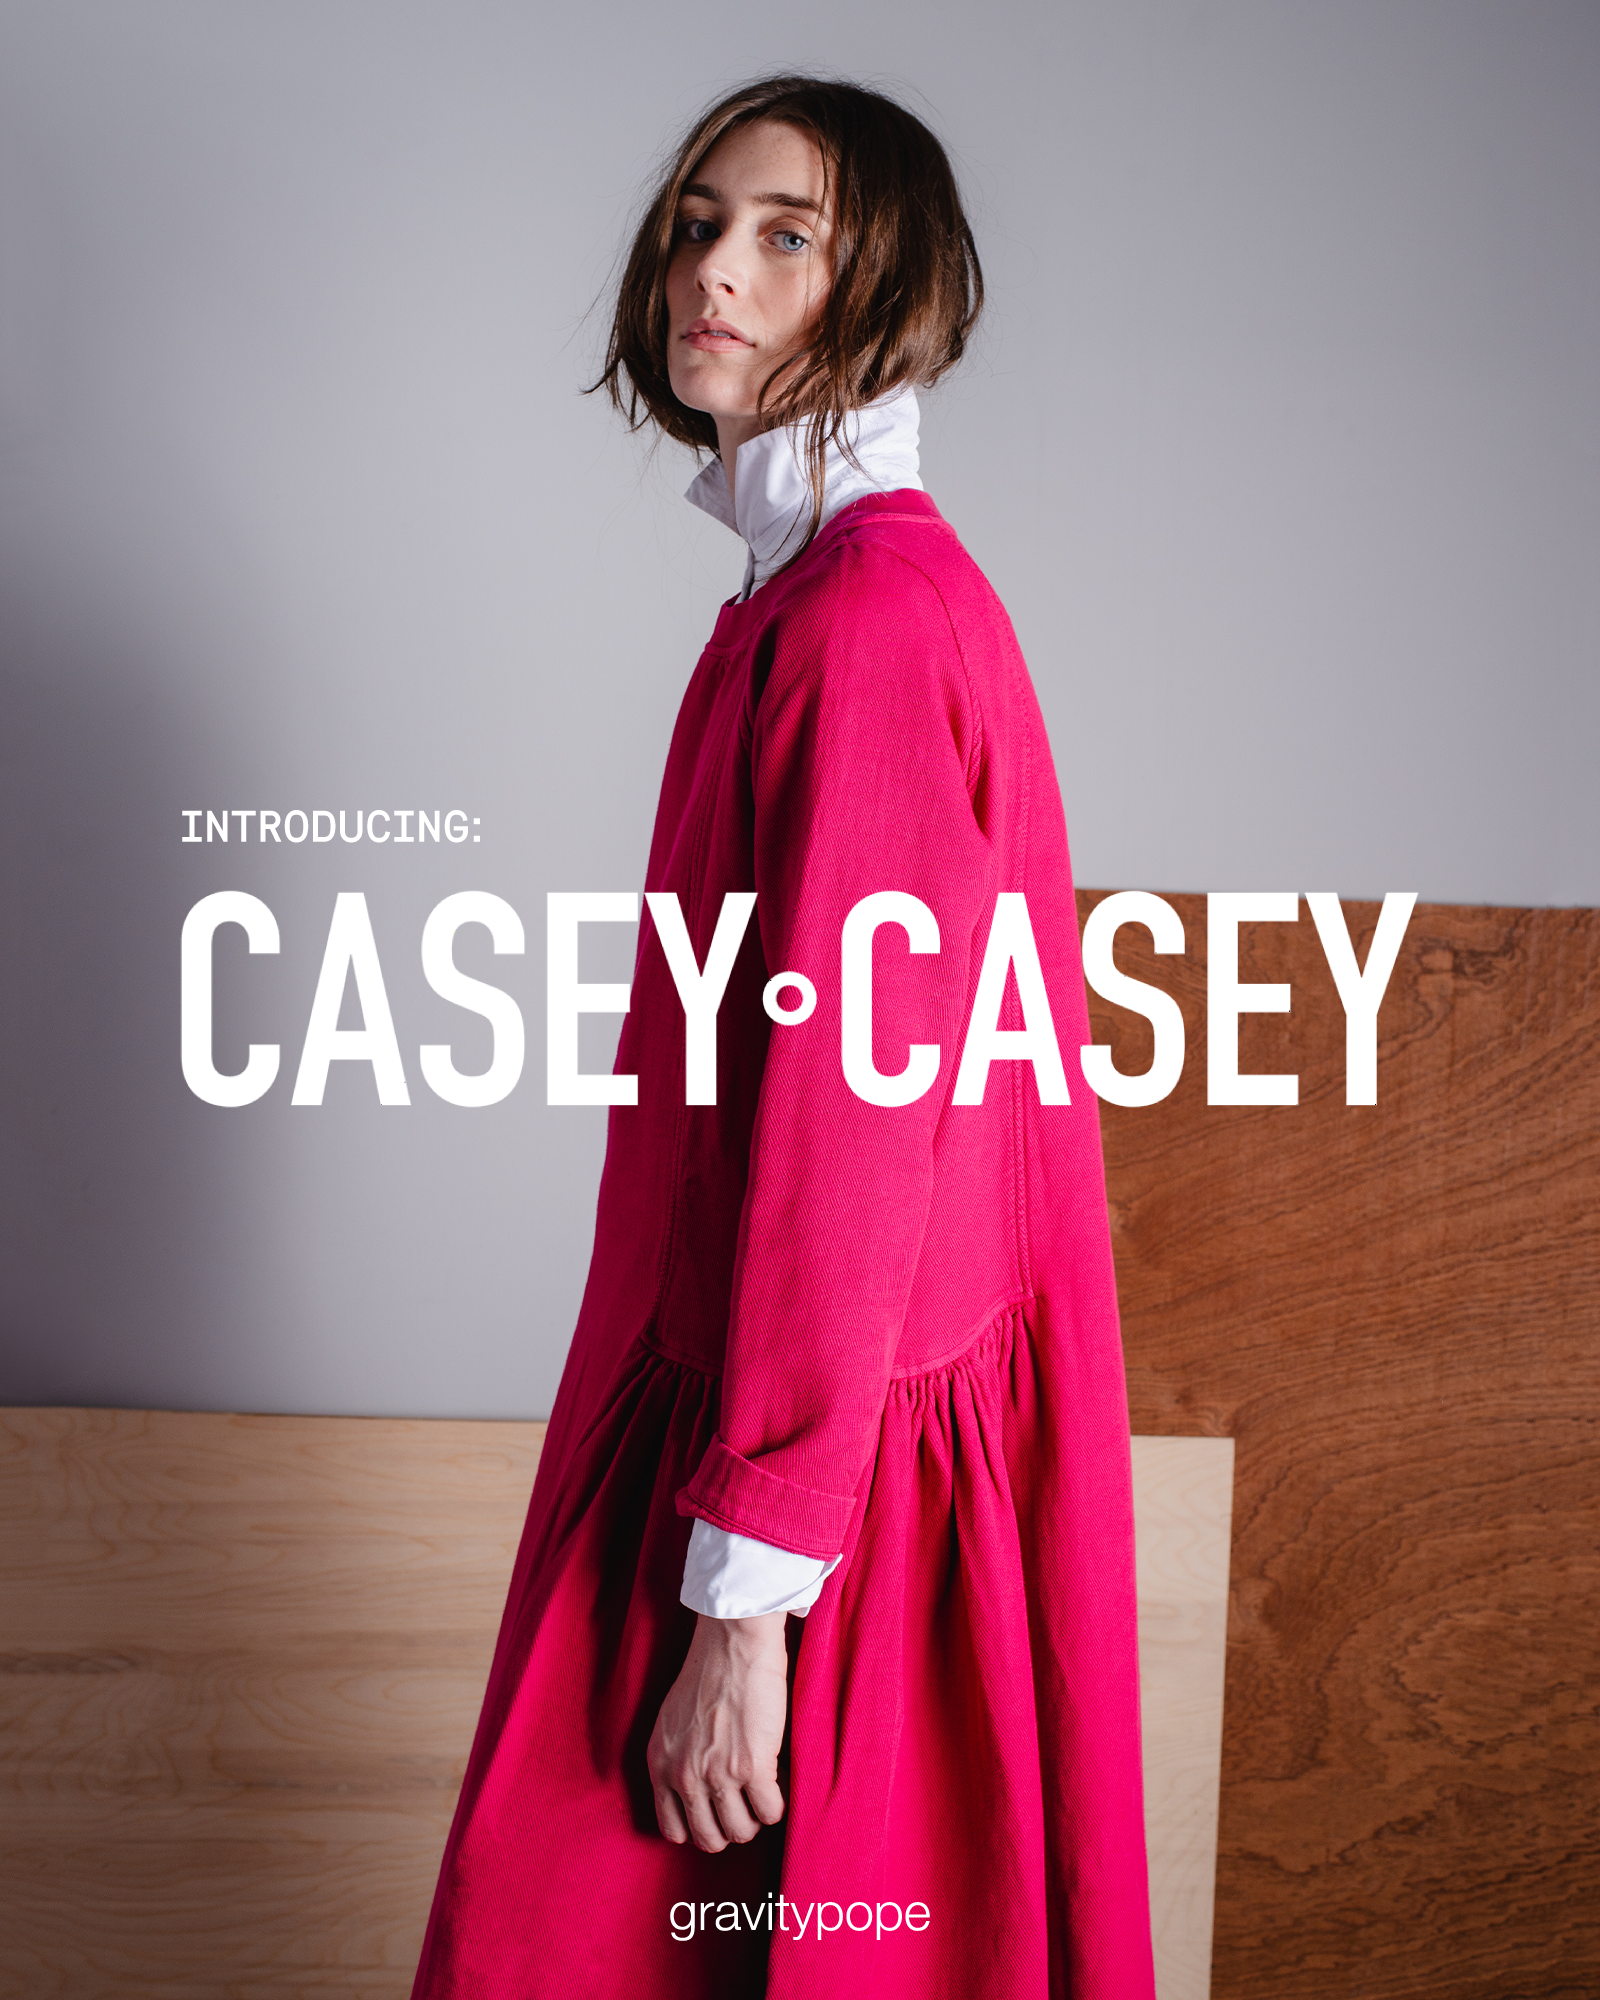 Introducing: Casey Casey